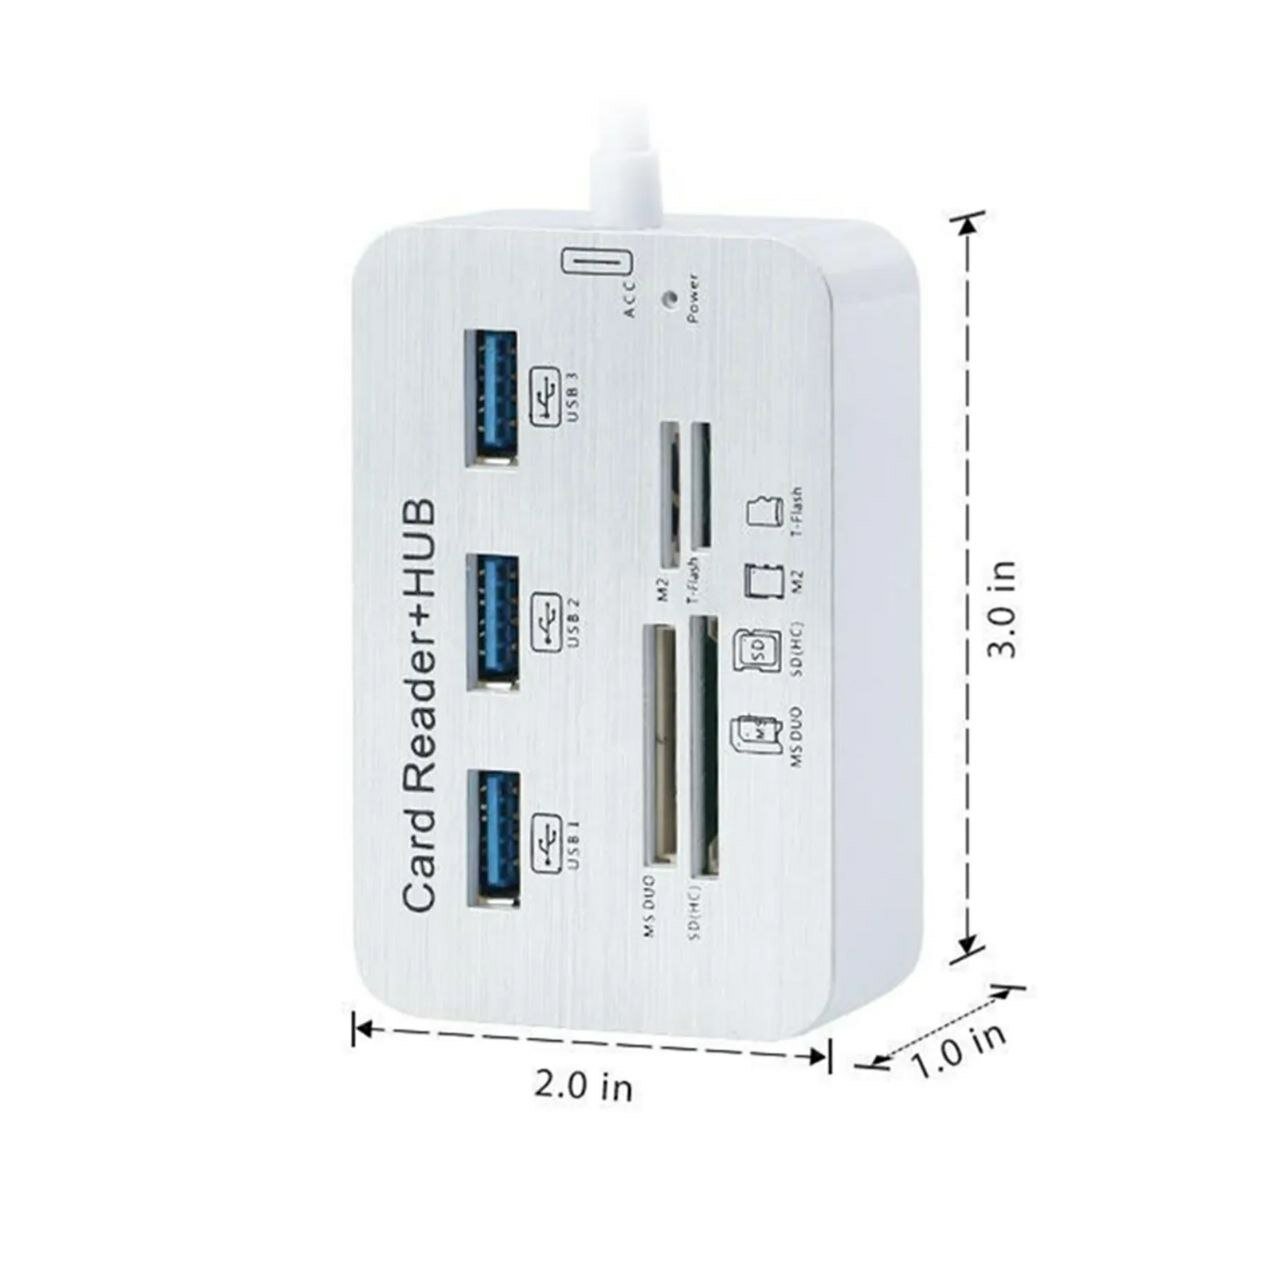 USB хаб-картридер HUB USB 30/31 3xUSB MS DUO SD (HC) M2 T-Flash Дисконт 63